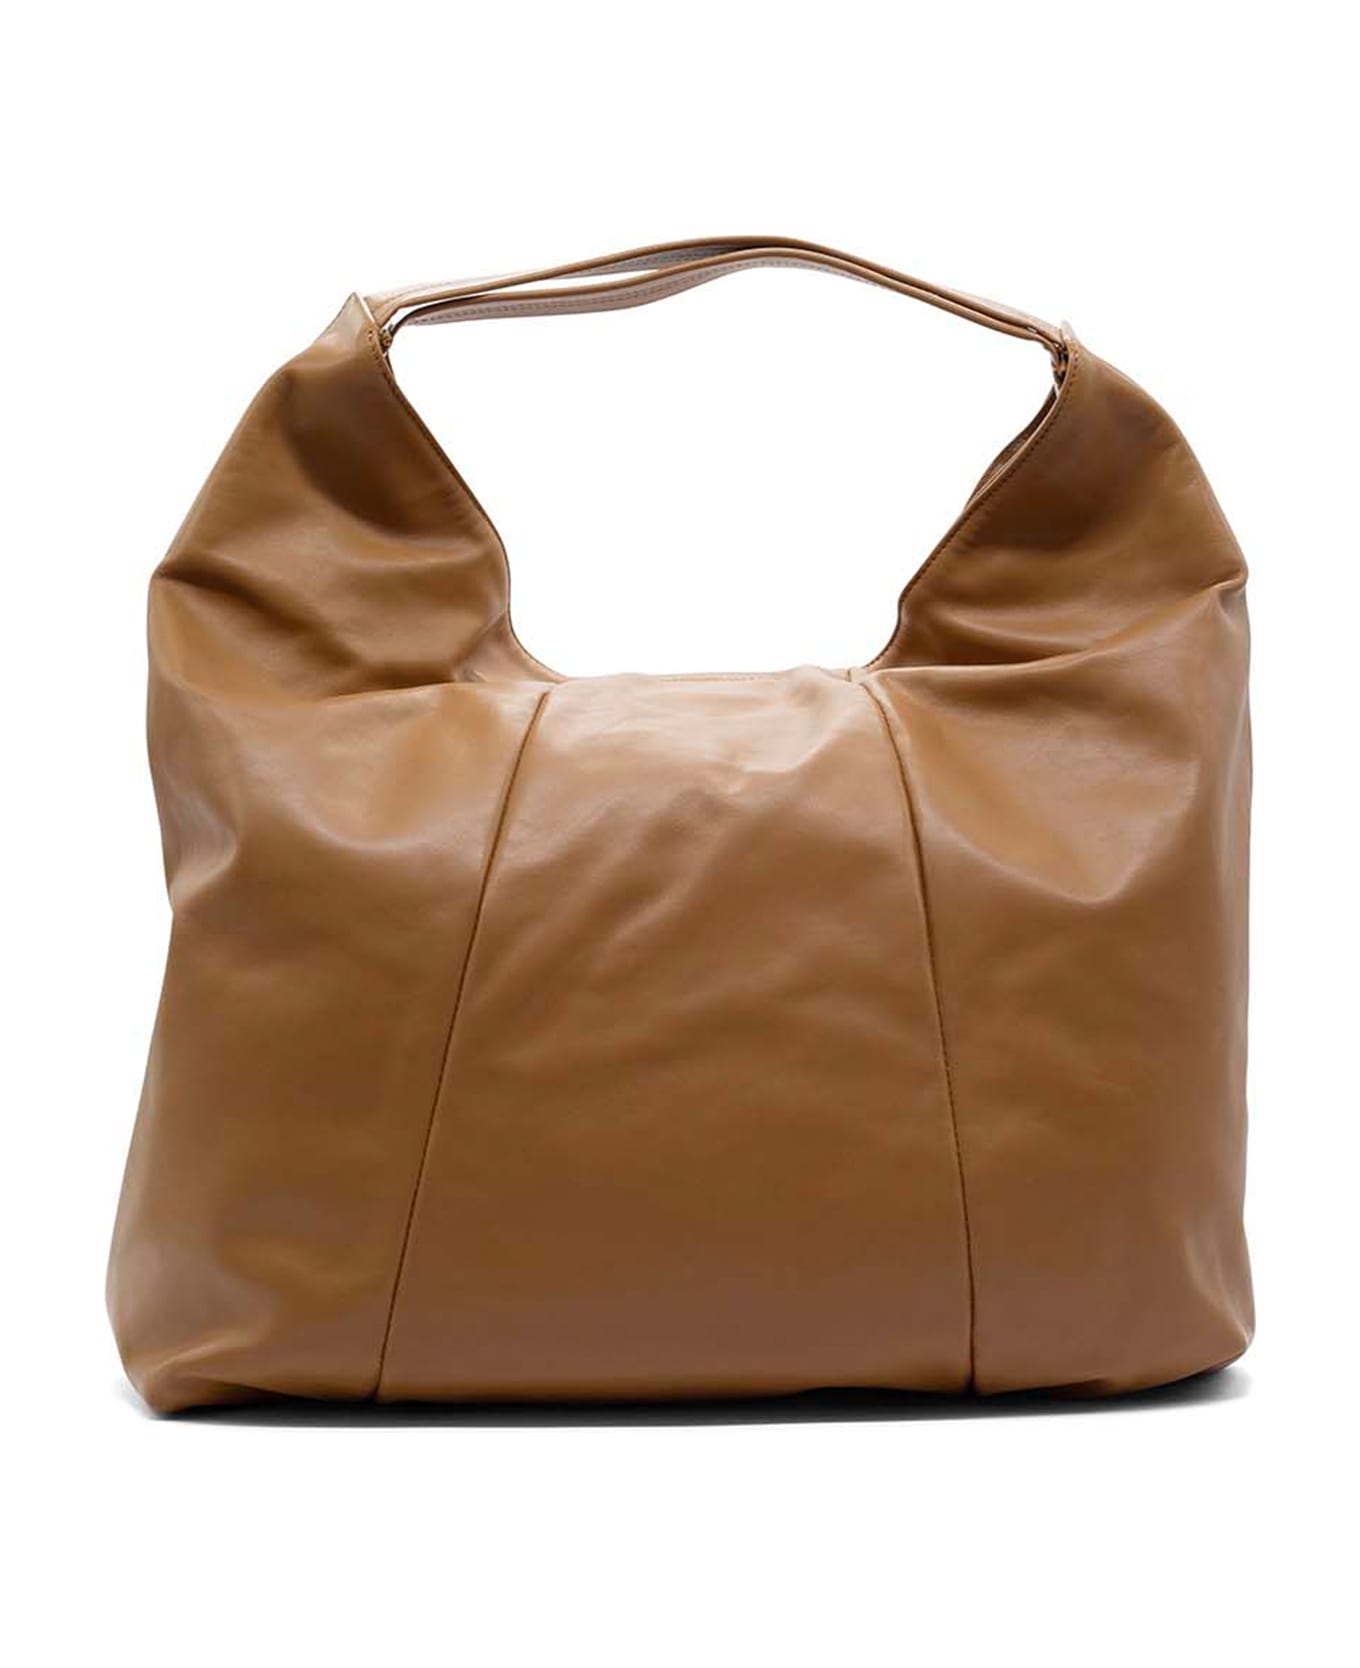 Vic Matié Biscuit Leather Shoulder Bag - BISCUIT